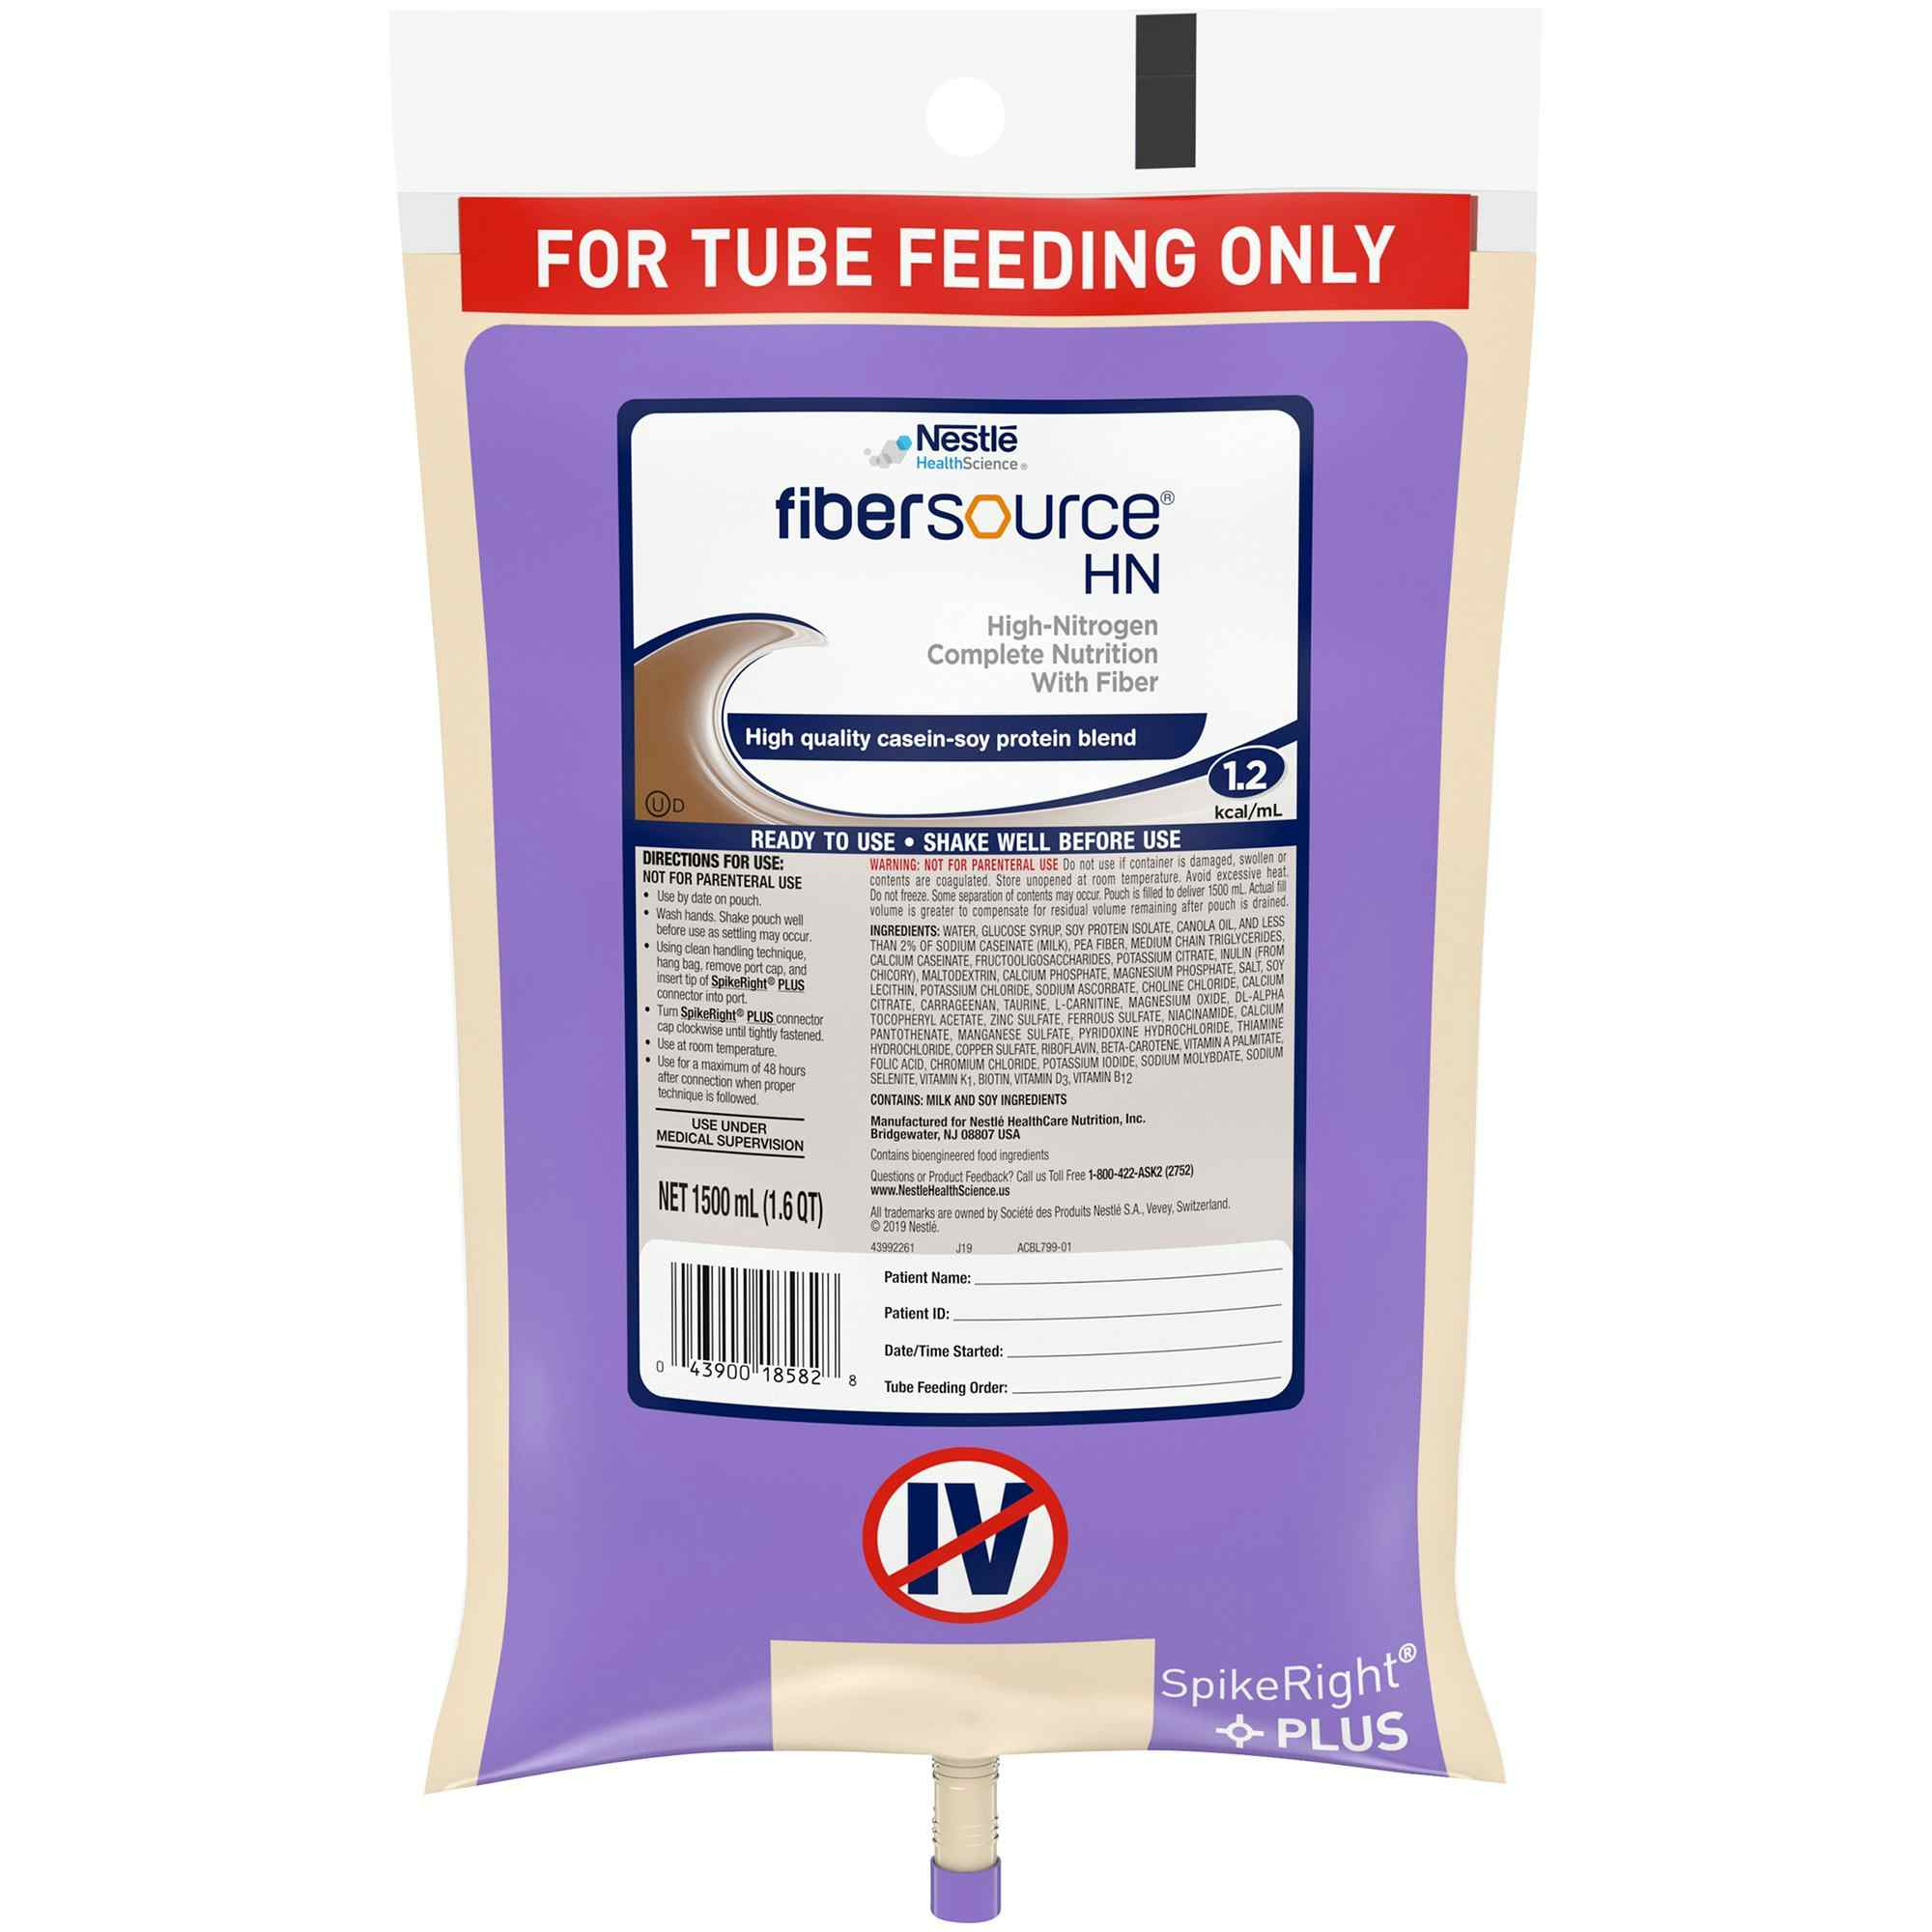 Fibersource HN High-Nitrogen Complete Nutrition with Fiber Tube Feeding Formula, 10043900185832, 50.7 oz. - 1 Each